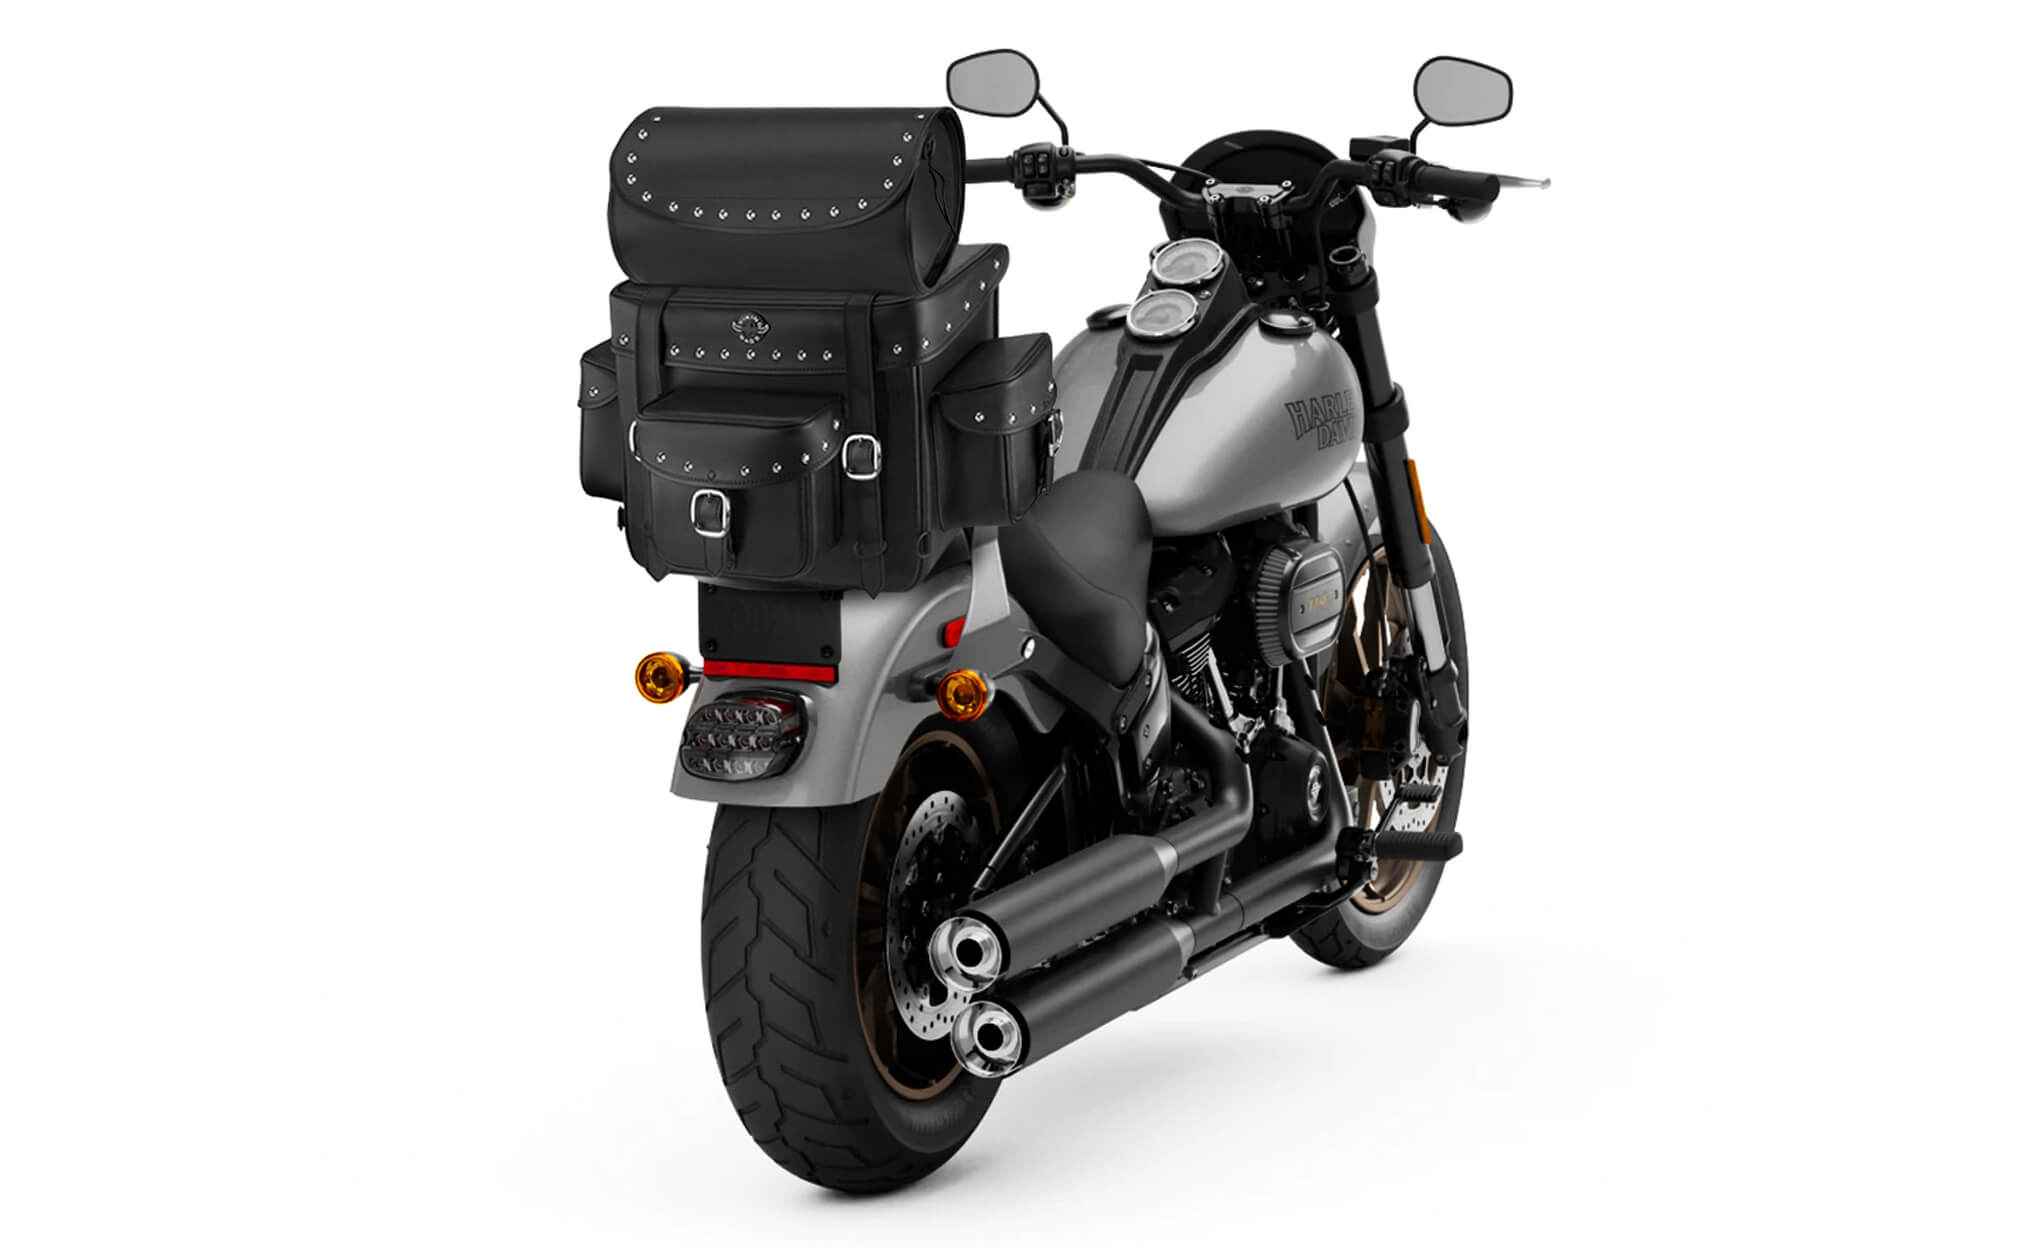 Viking Revival Series Large Honda Studded Motorcycle Tail Bag Bag on Bike View @expand